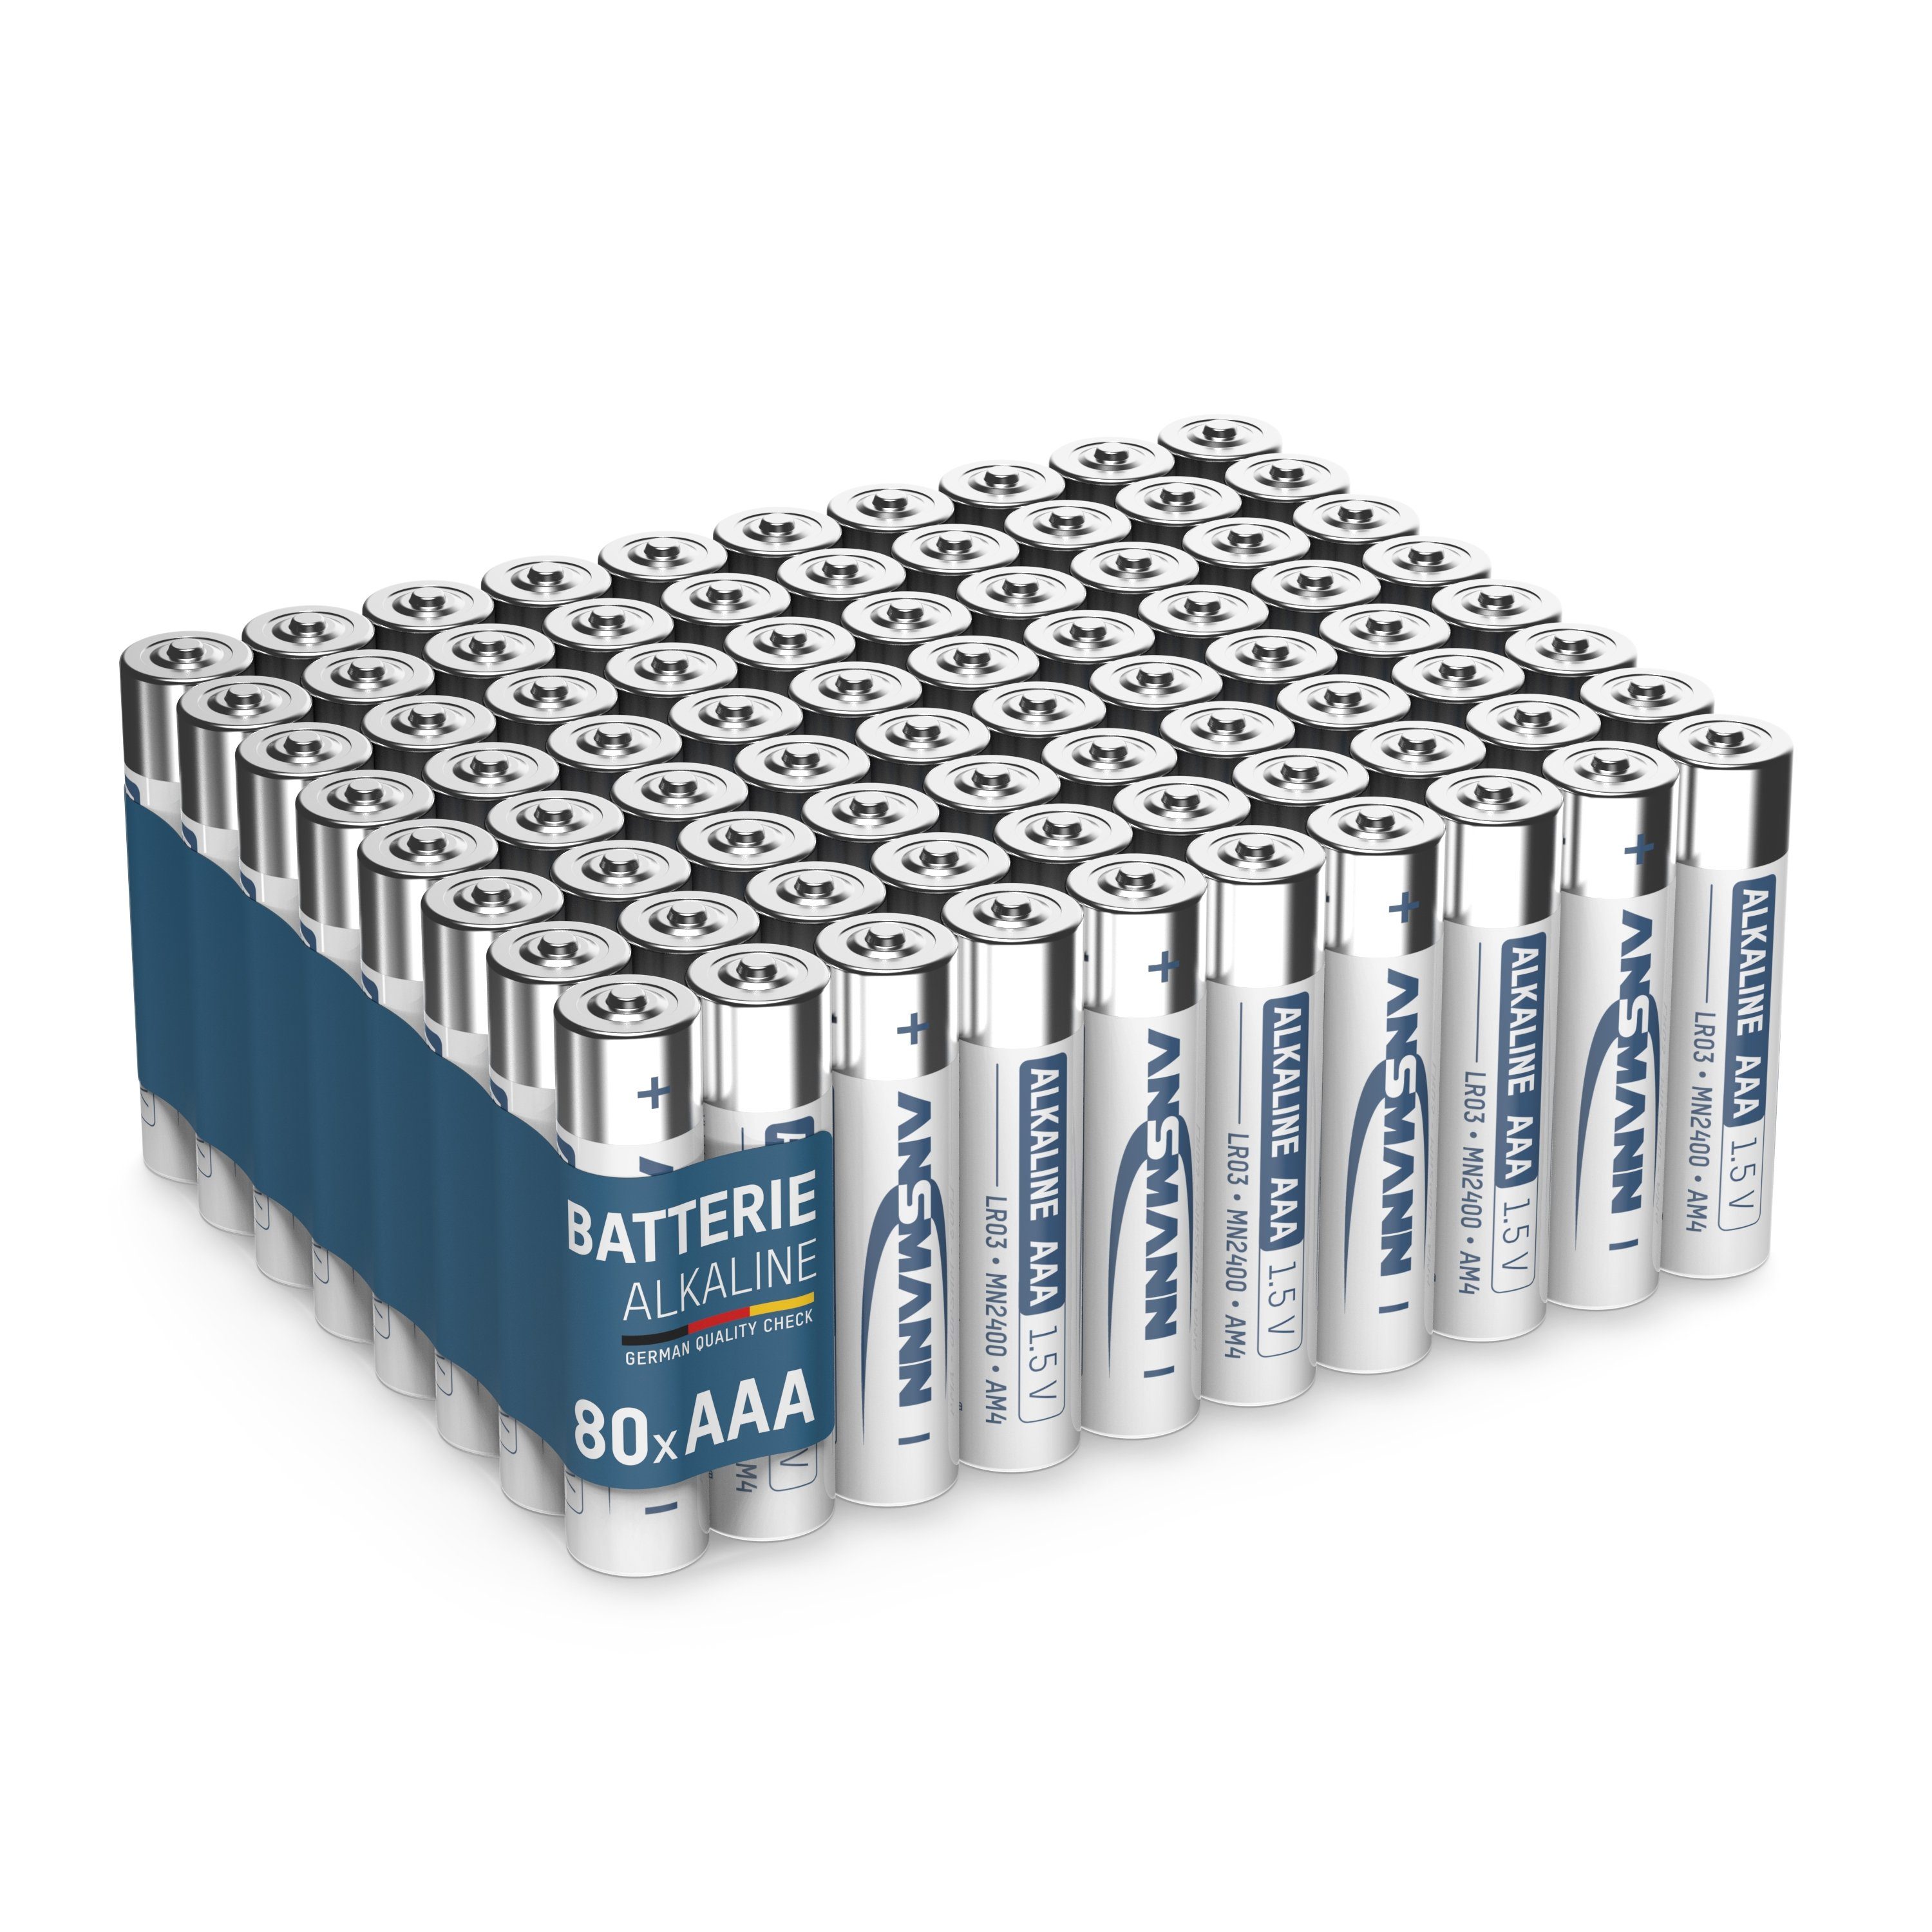 ANSMANN® Batterien AAA Alkaline Größe LR03 - (80 Stück Vorratspack) Batterie